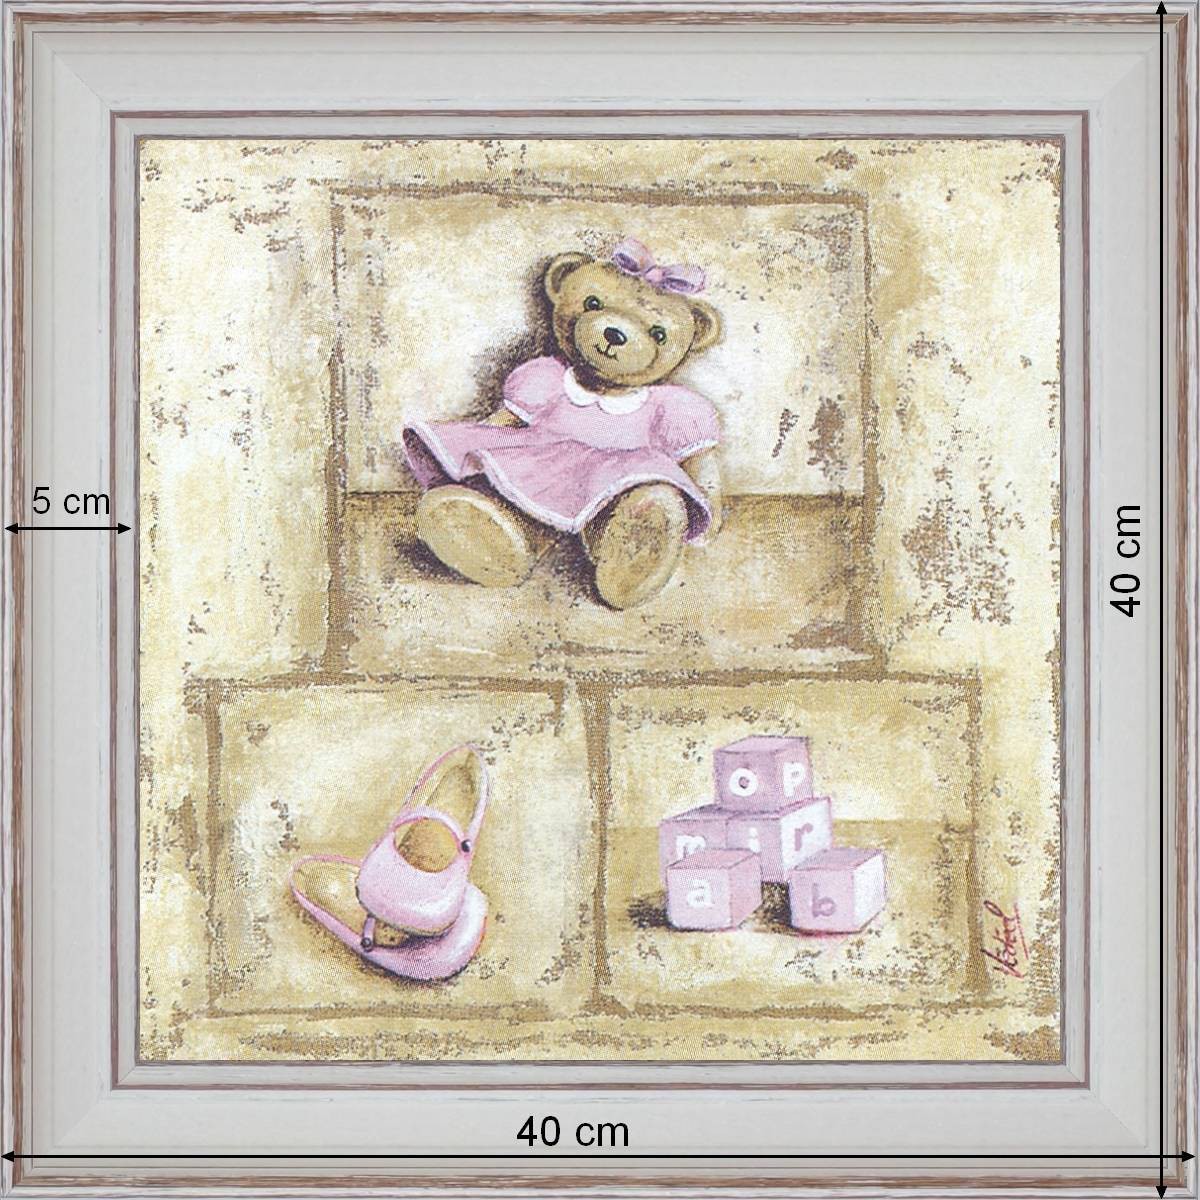 Pink Nounours - dimensions 40 x 40 cm